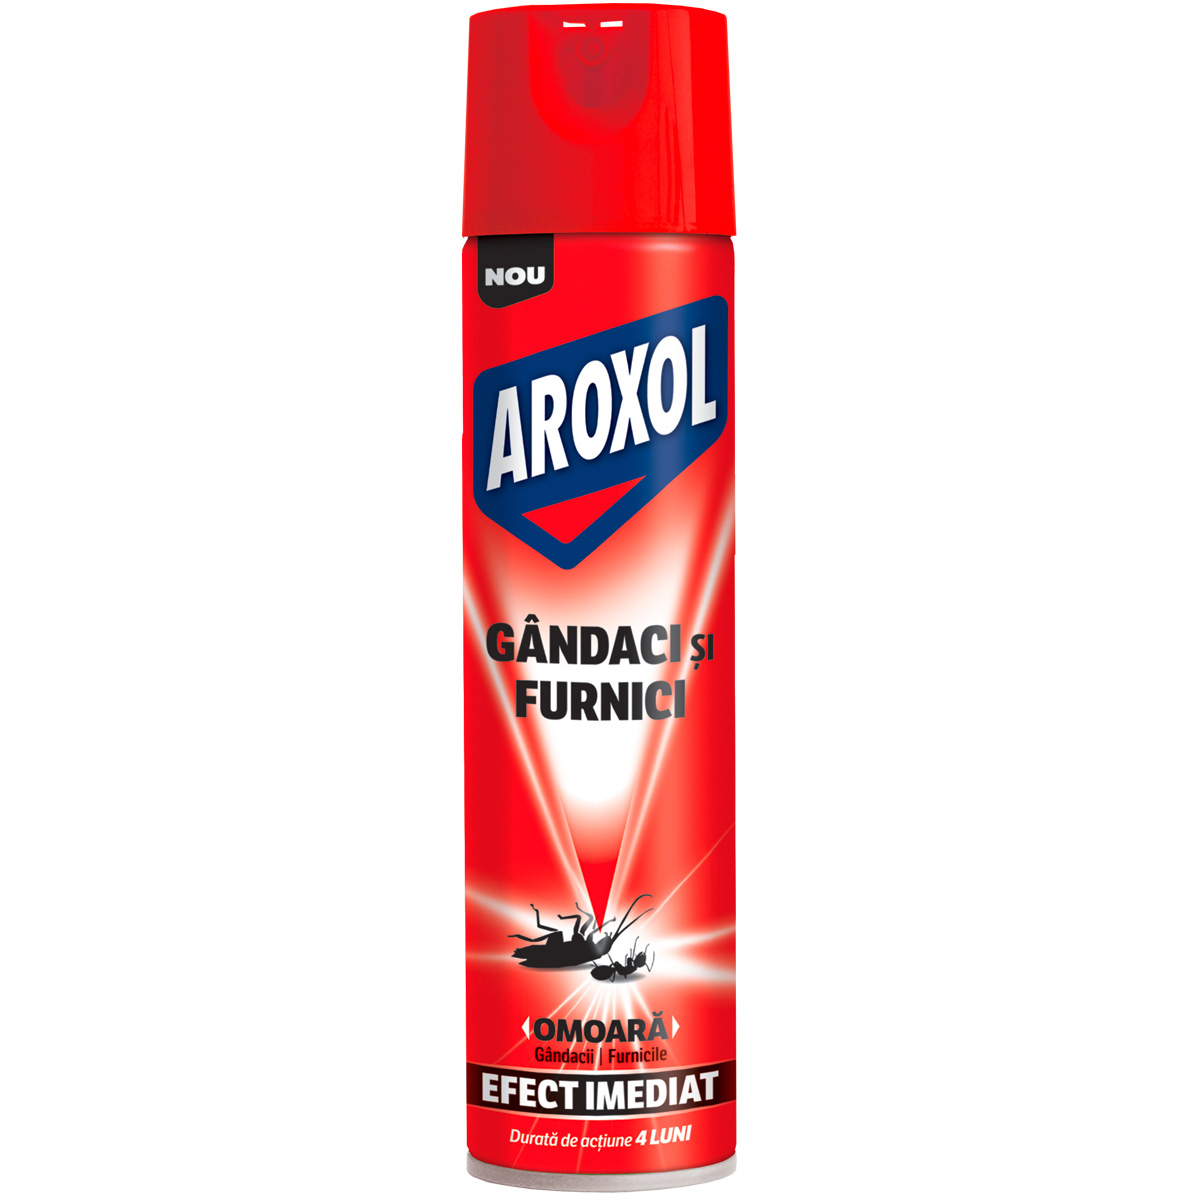 Spray gandaci/furnici Aroxol, efect imediat, 400 ml 400